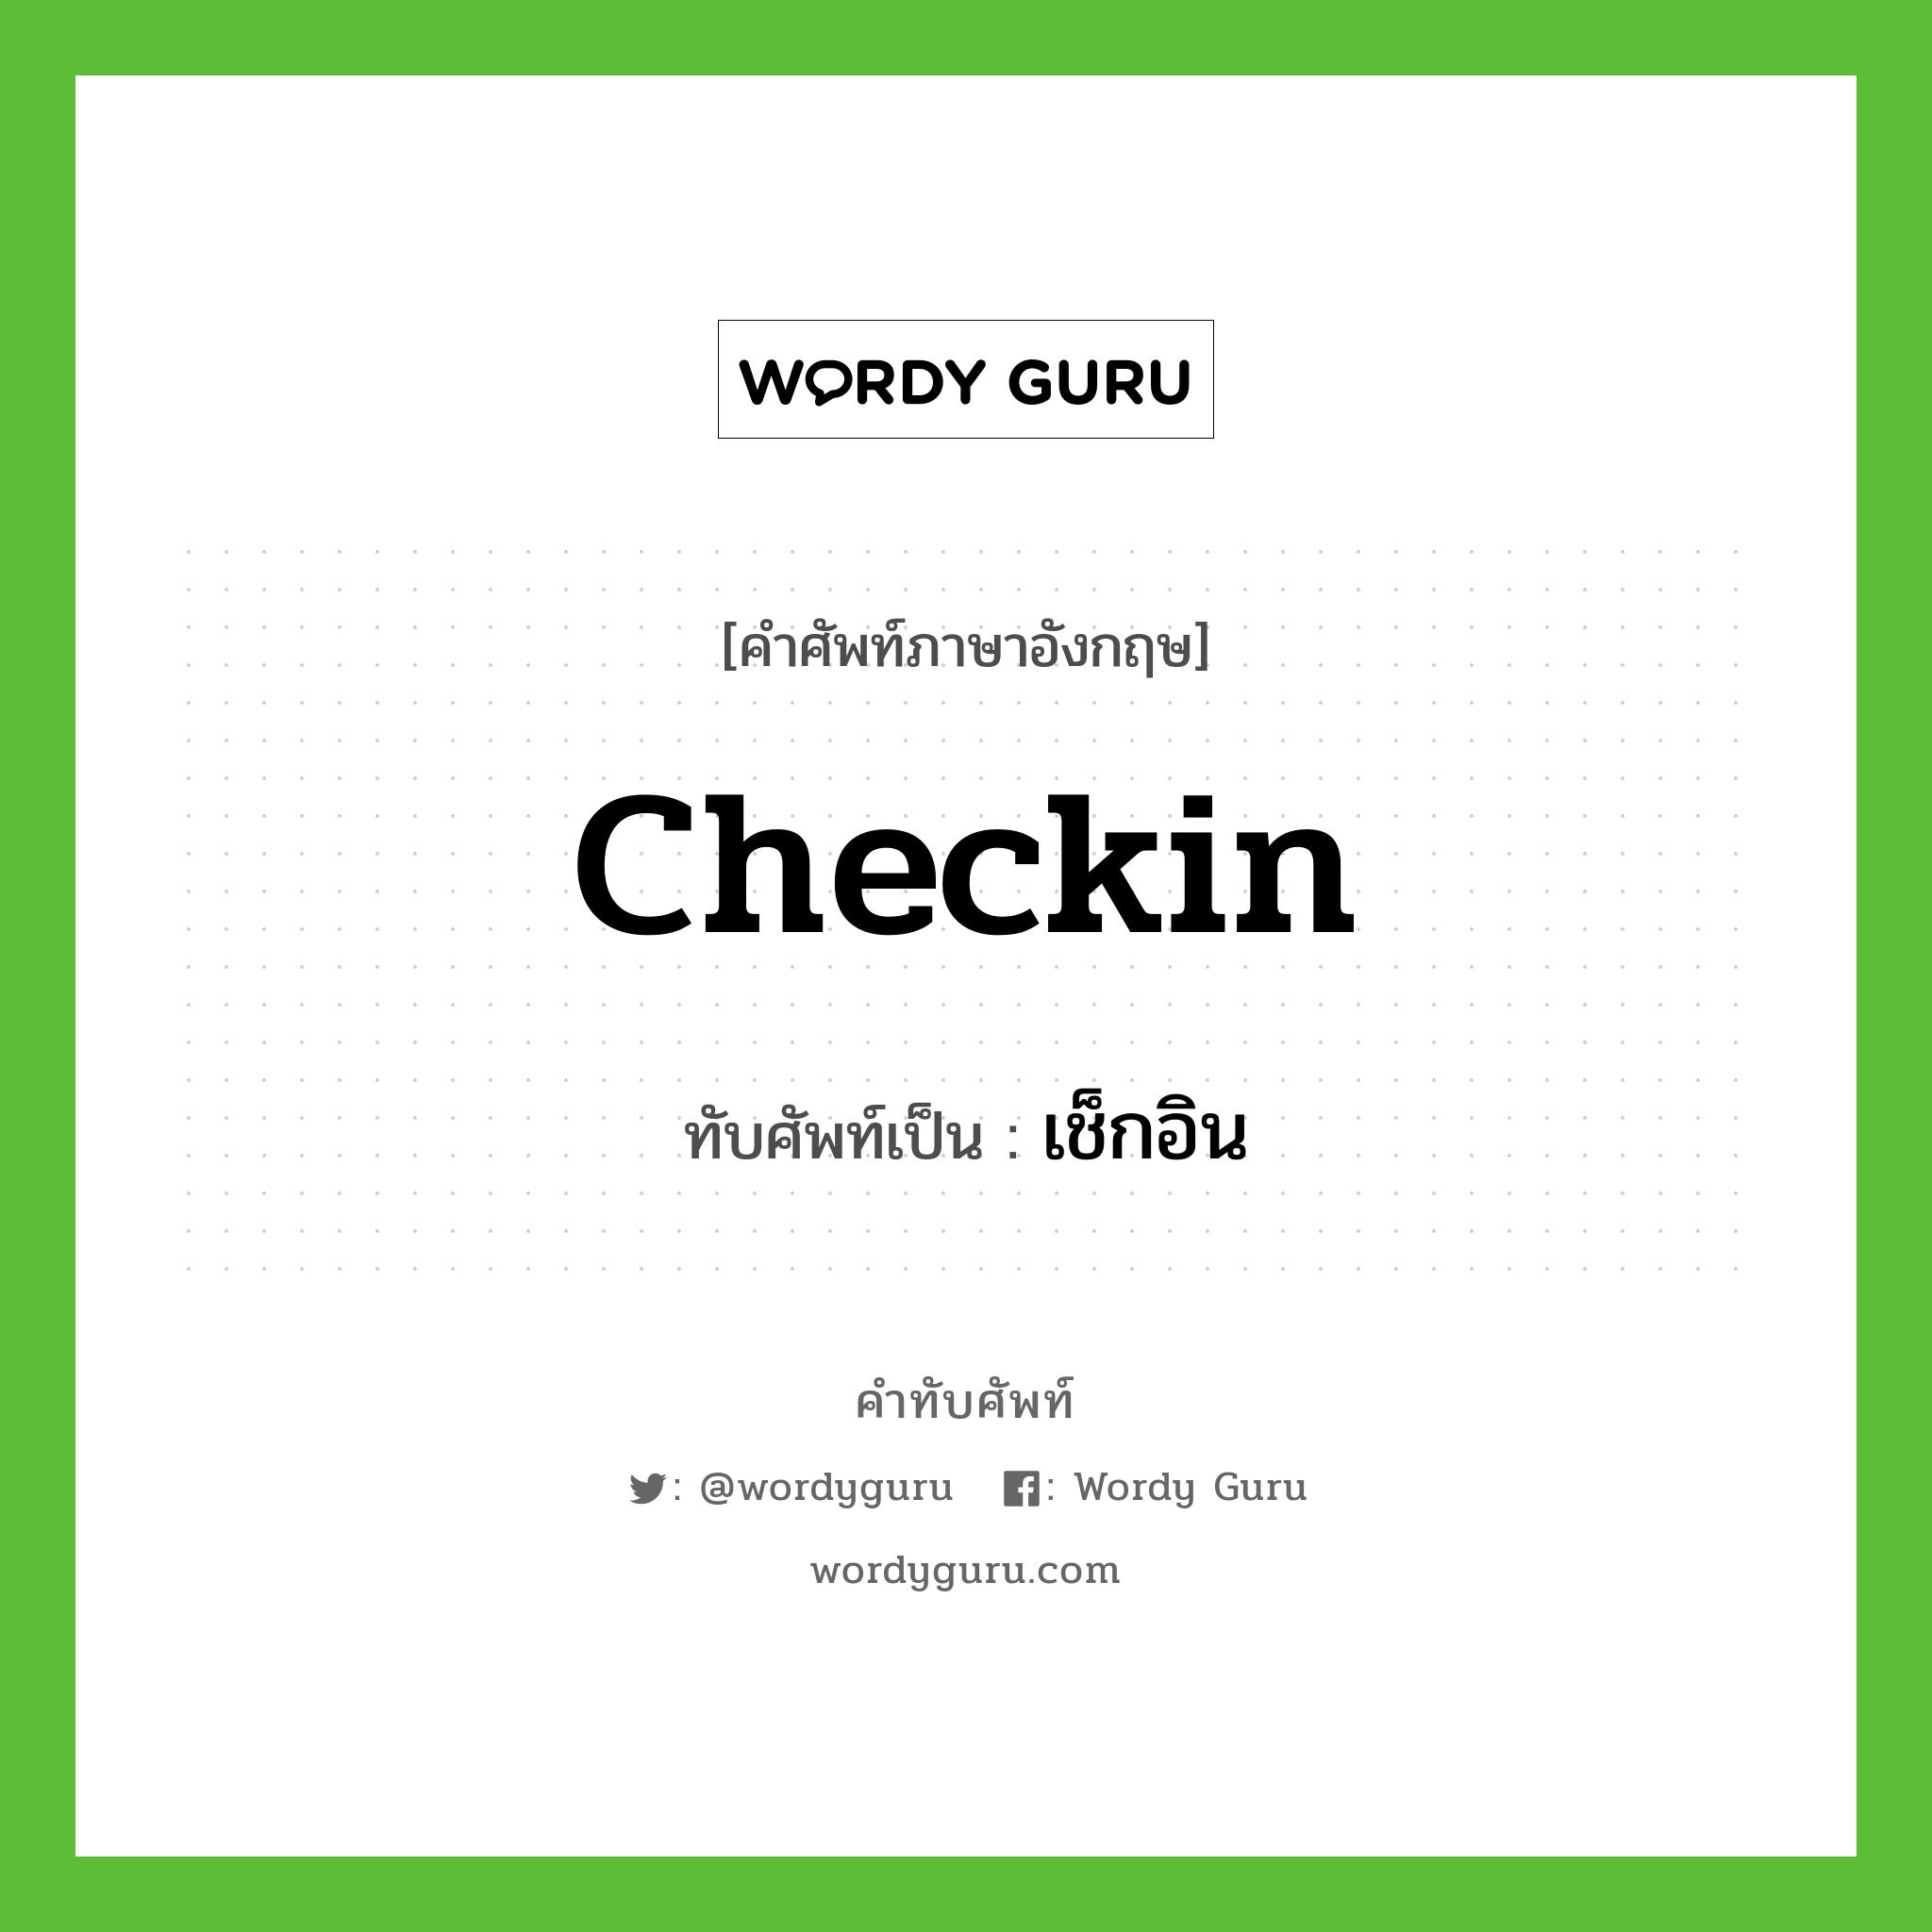 checkin เขียนเป็นคำไทยว่าอะไร?, คำศัพท์ภาษาอังกฤษ checkin ทับศัพท์เป็น เช็กอิน